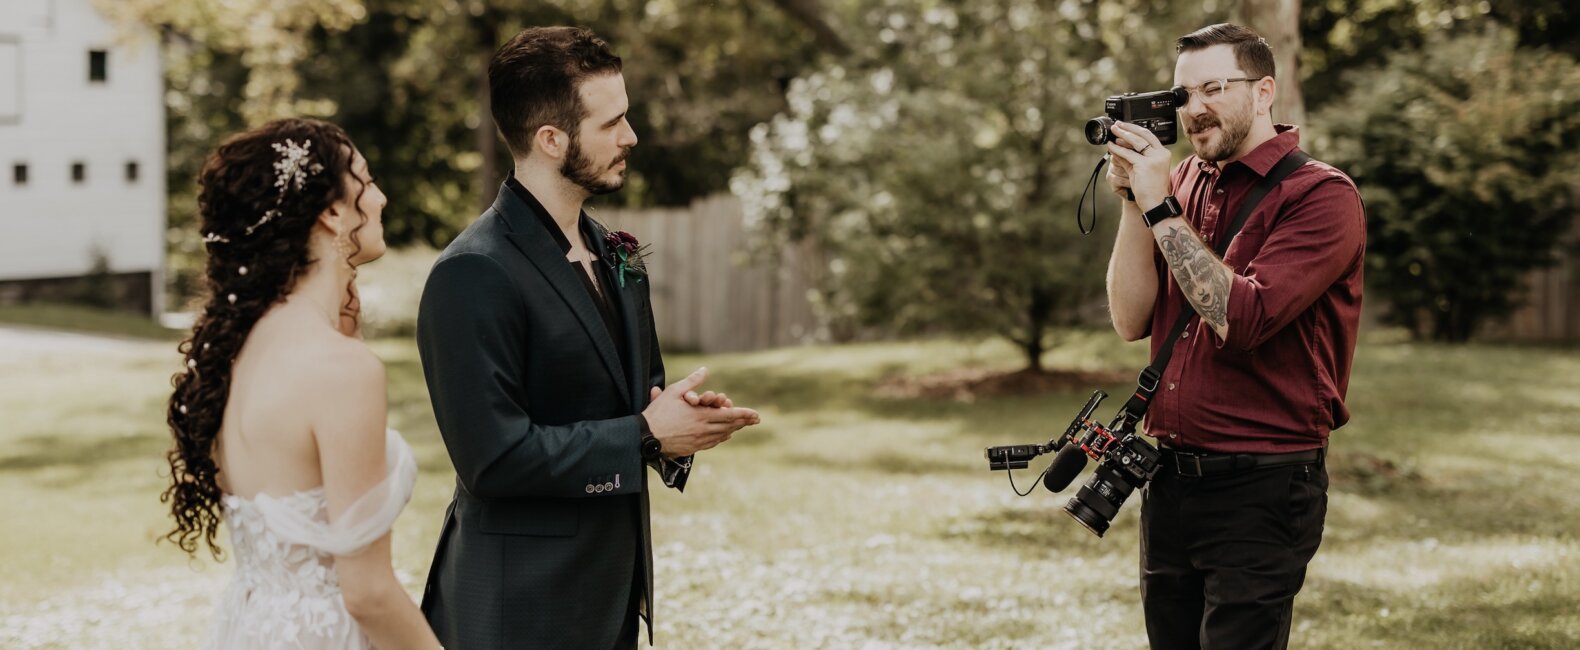 American Rose Films capturing wedding